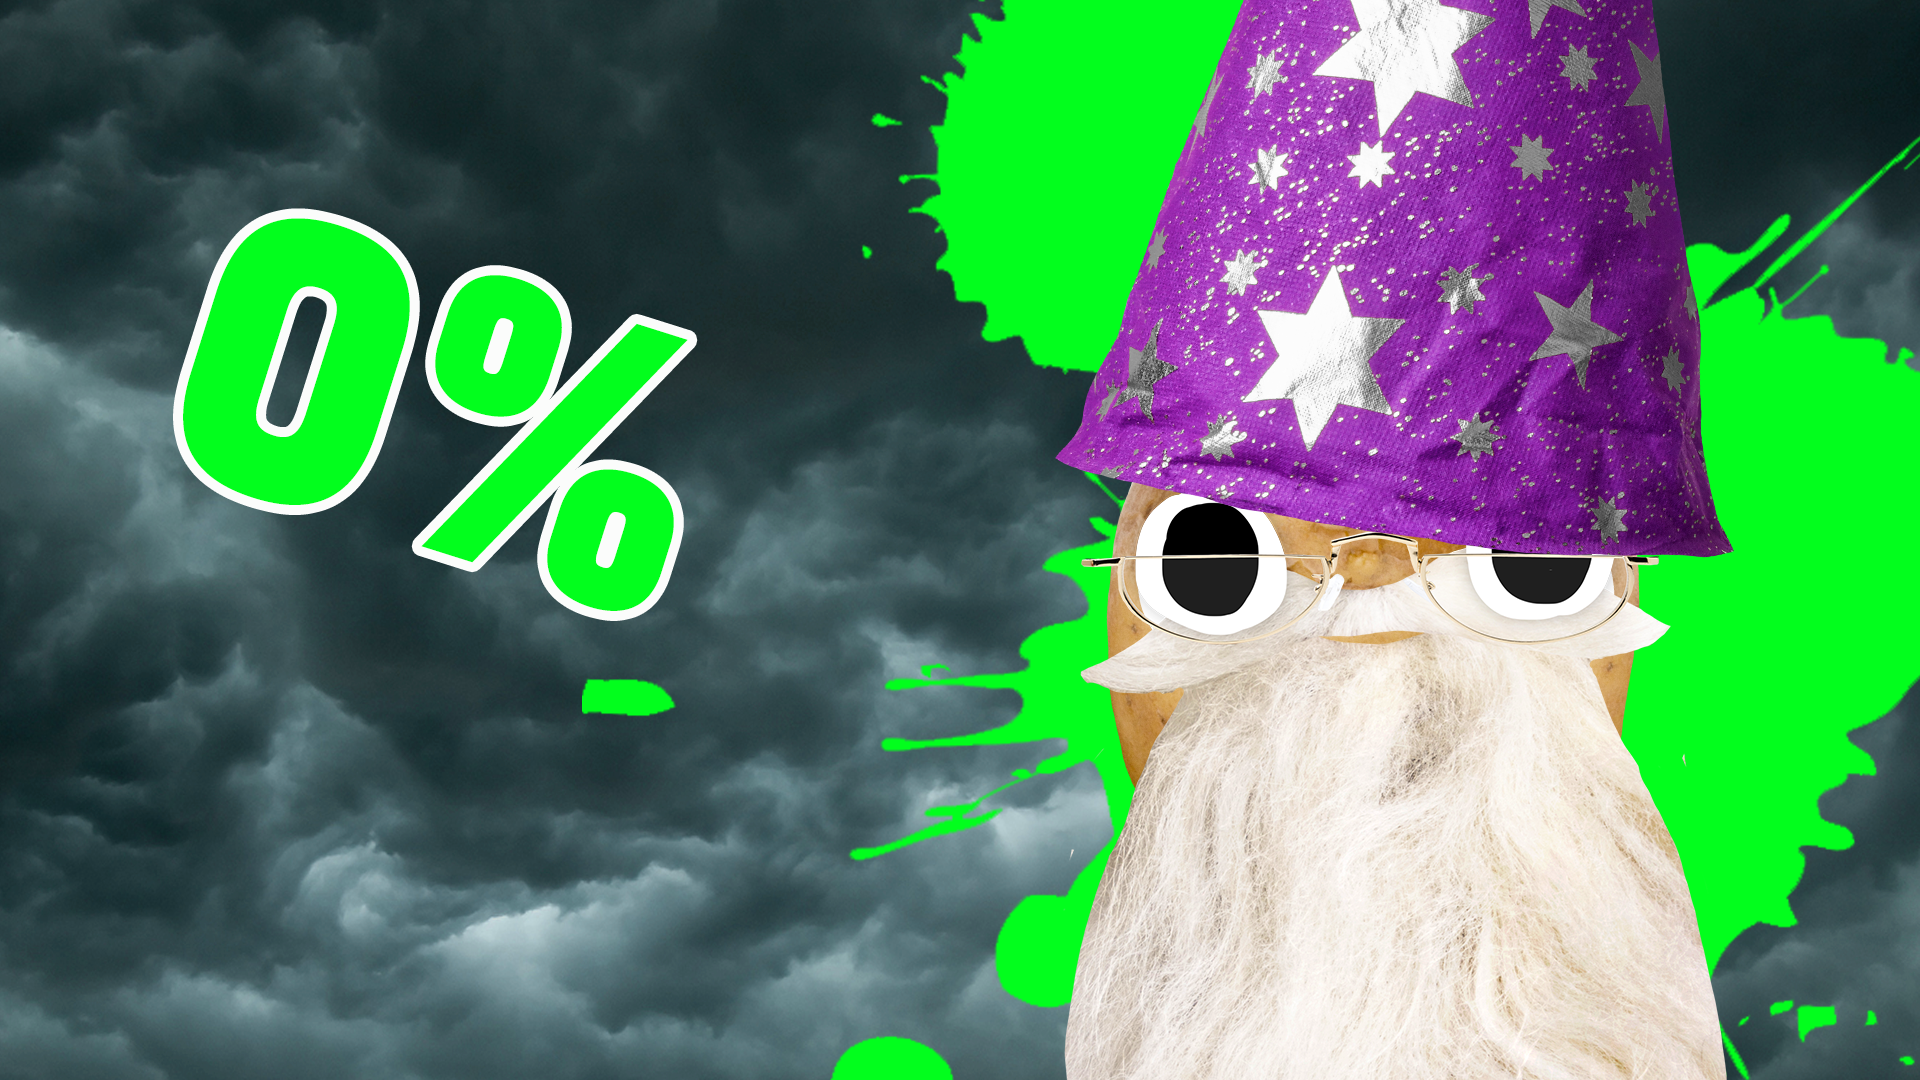 0% Voldemort Result